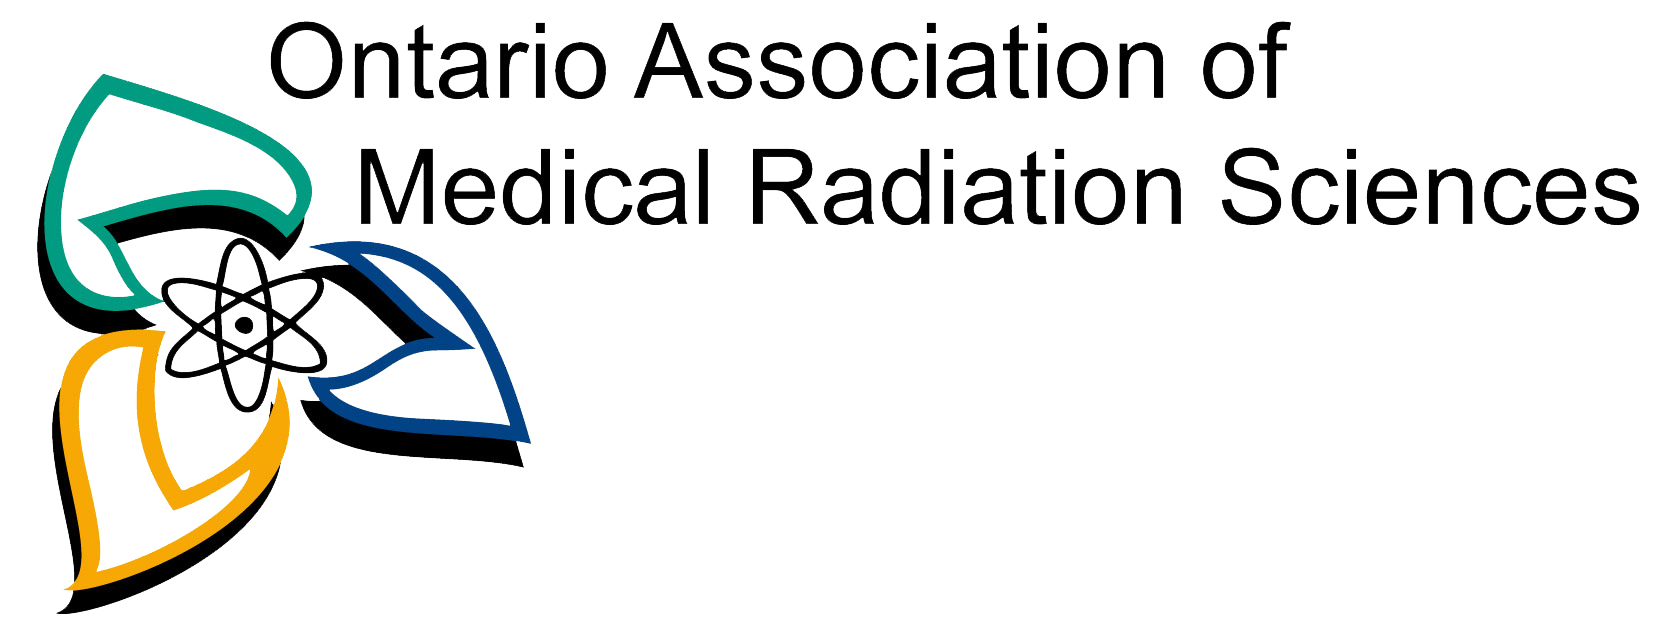 Ontario Association of Medical Radiation Sciences - OAMRS